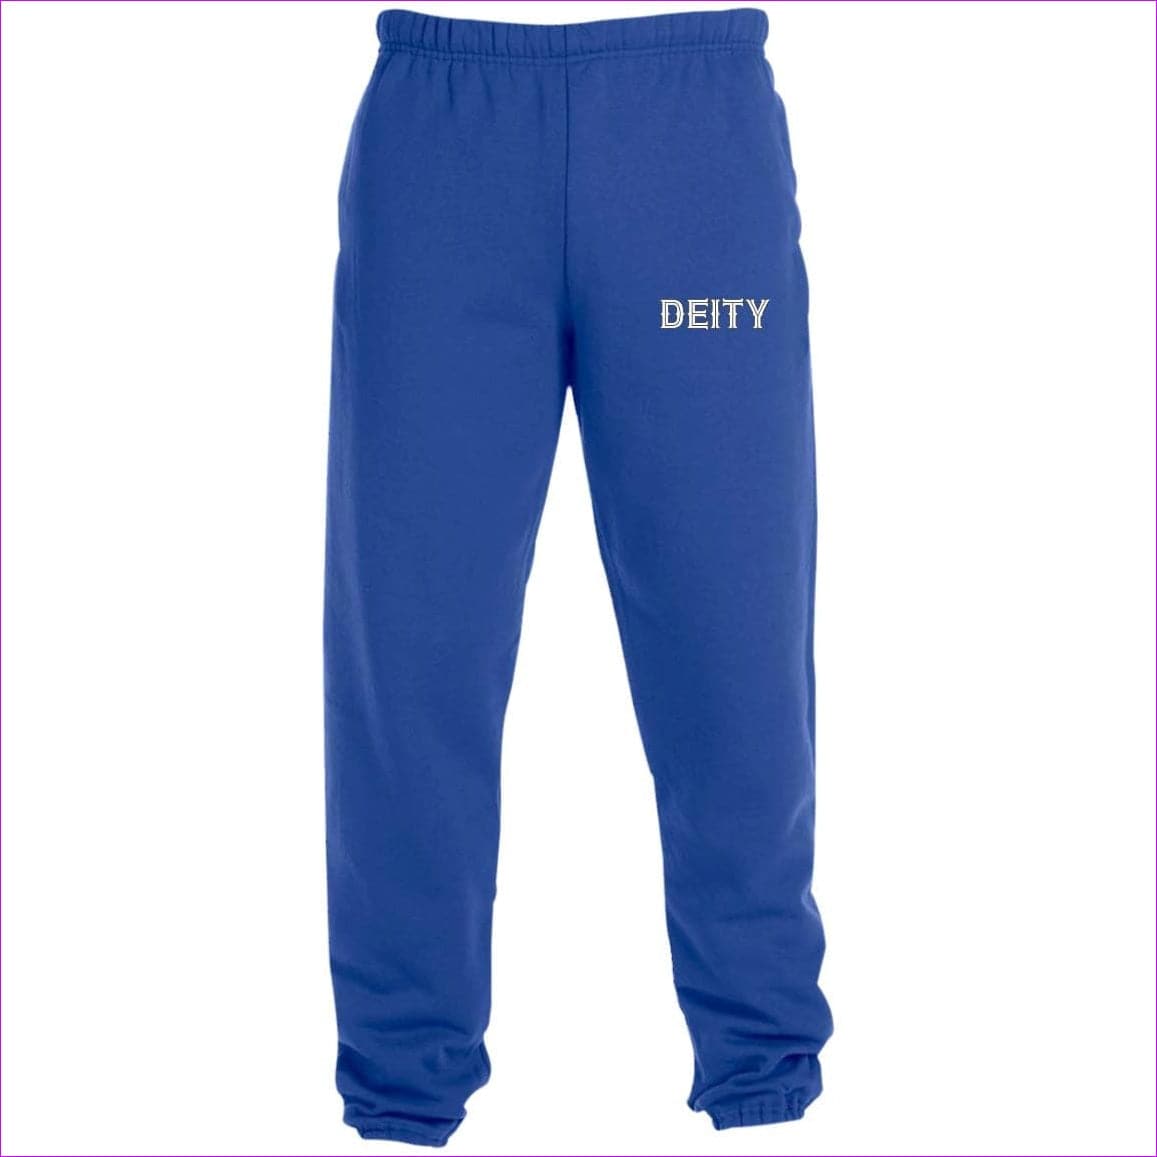 Royal - Deity Sweatpants with Pockets - unisex jogging pants at TFC&H Co.